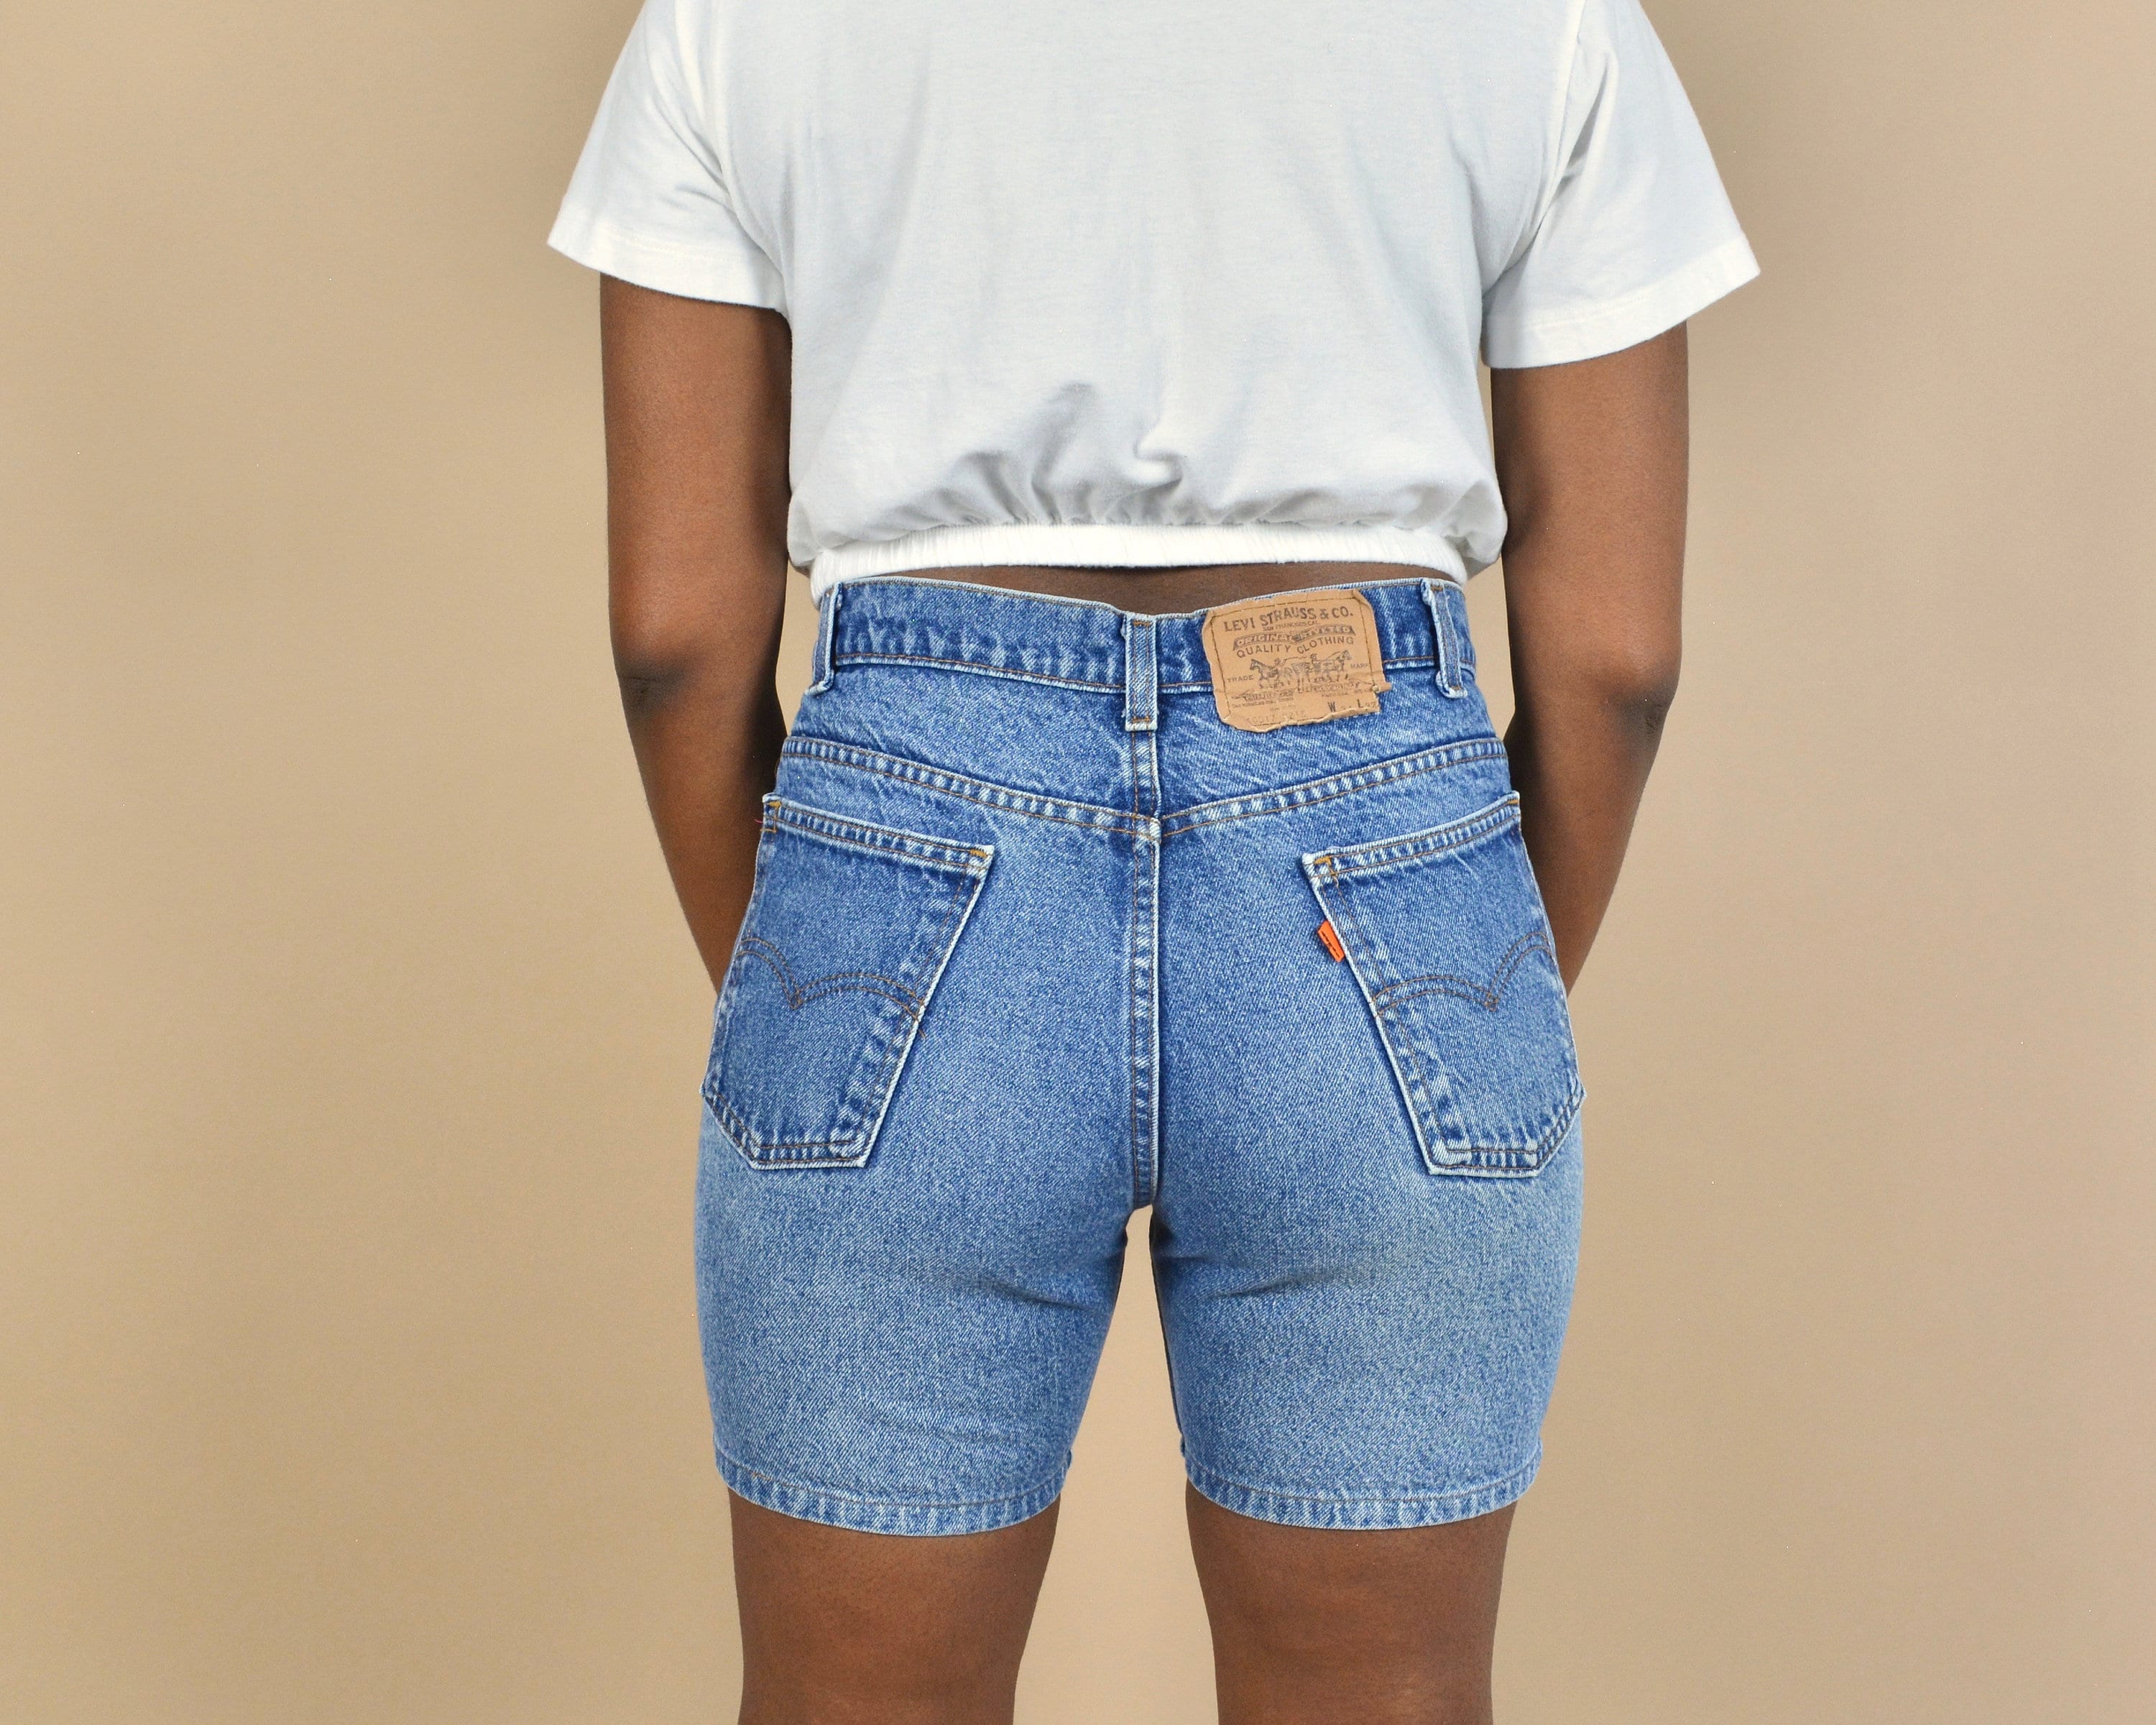 Vintage Orange Tab Levi’s Cut Denim Shorts Clothing Gender-Neutral Adult Clothing Shorts Made in Canada Levi’s Shorts 34W S73 